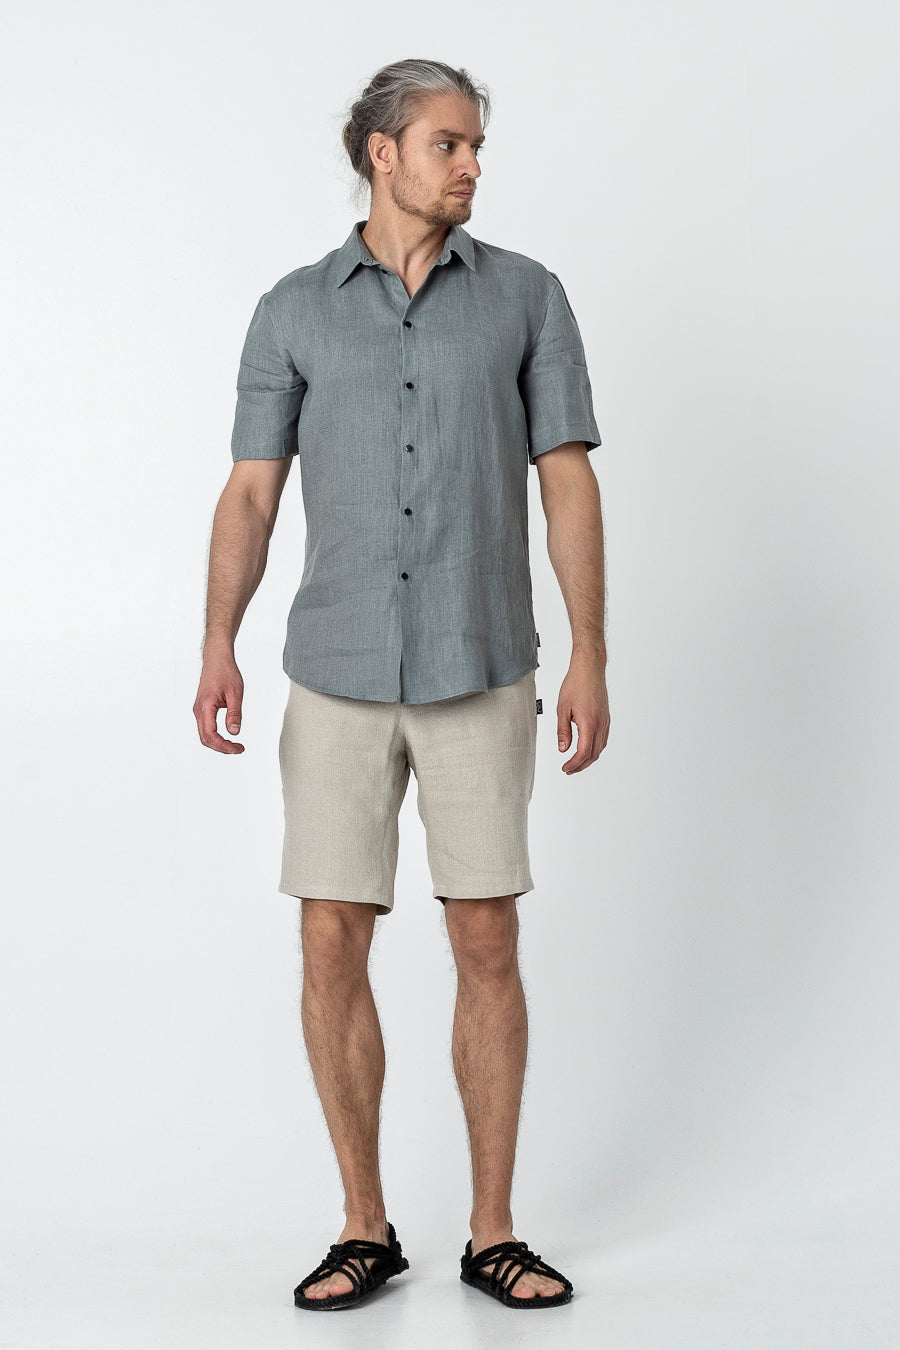 ENMEYO | Short sleeve linen dress shirt - Mezzoroni